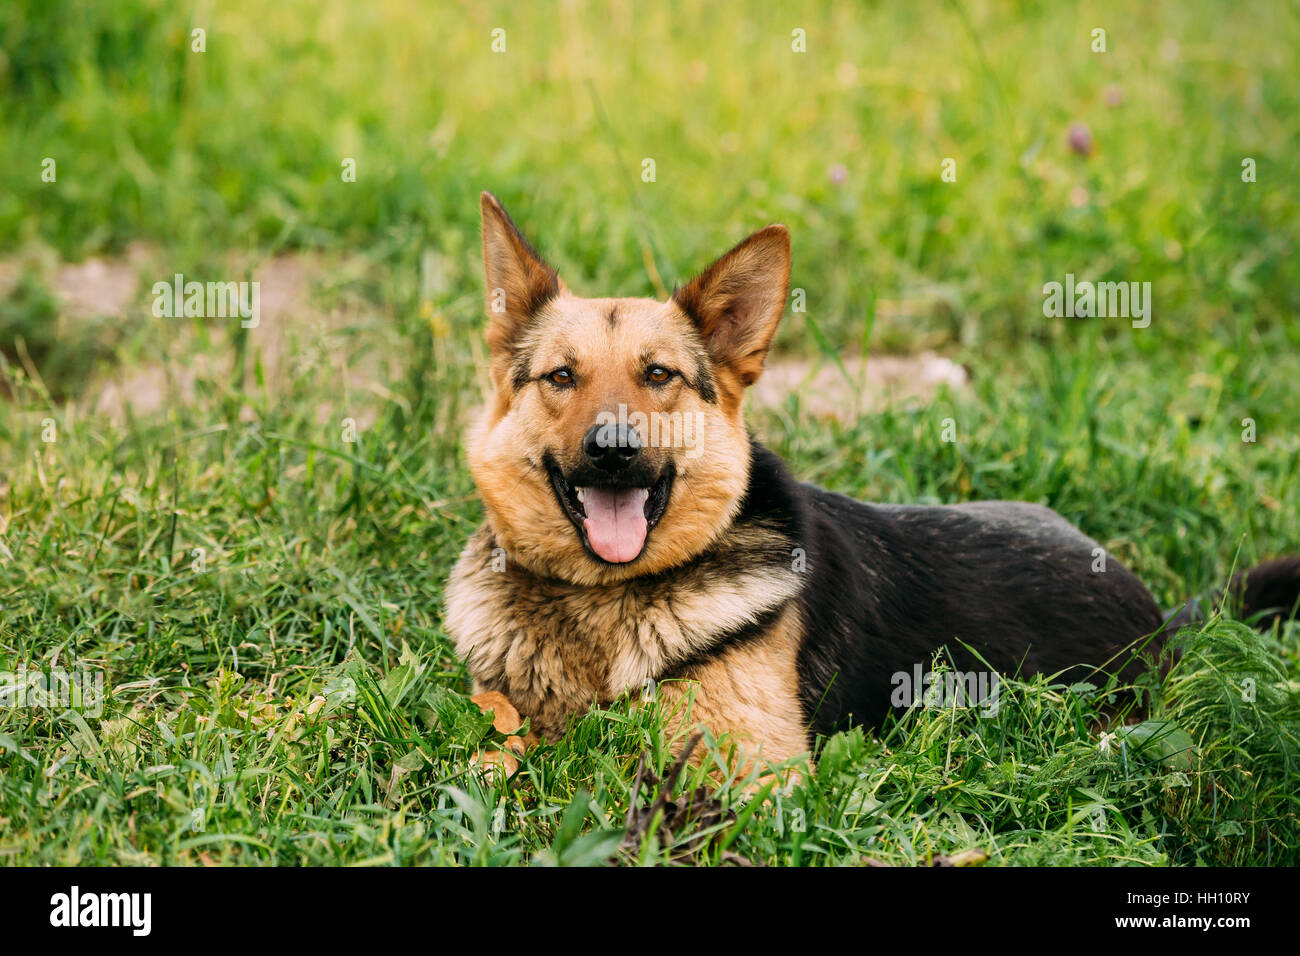 Funny Dog Taille moyenne s'asseoir dans l'herbe verte Piscine Banque D'Images